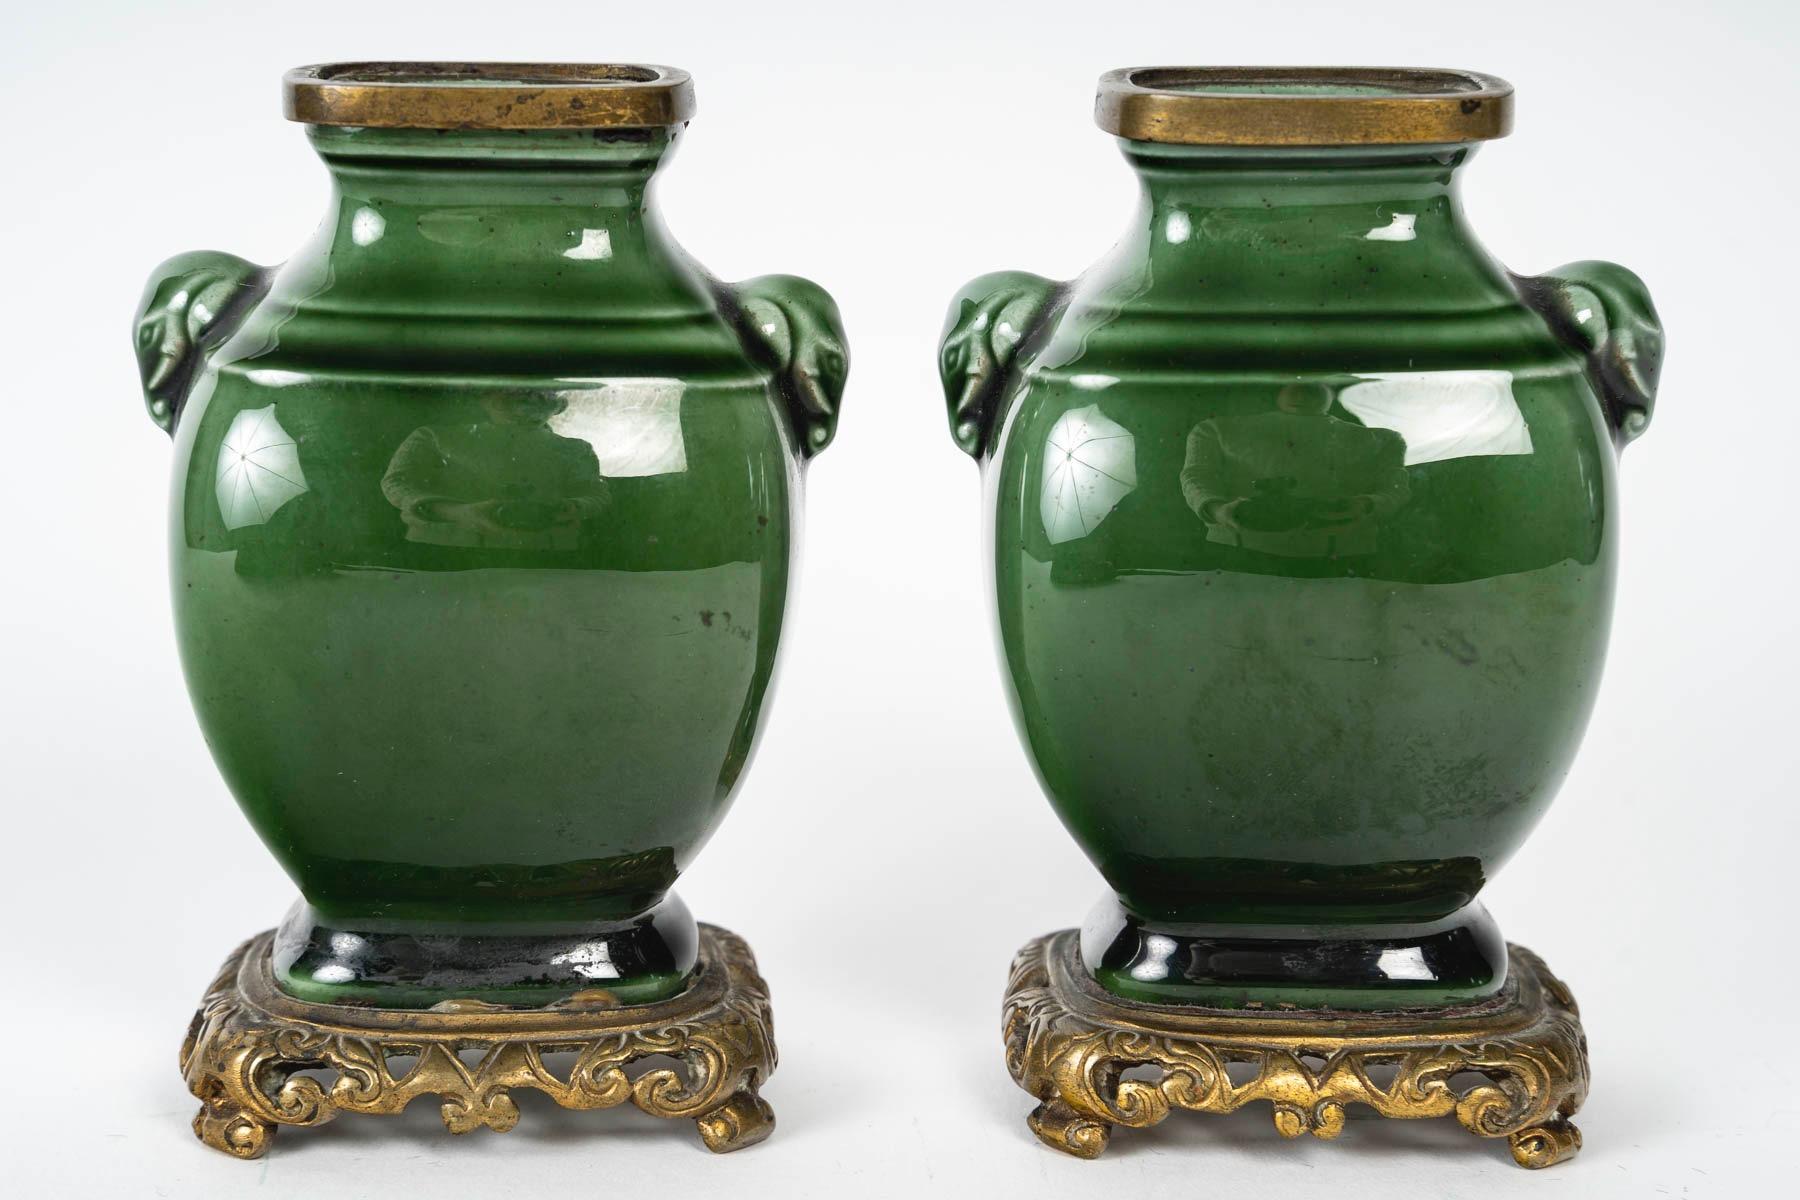 Théodore Deck (1823-1891), Miniature Fayence-Vasenpaar um 1870 im Angebot